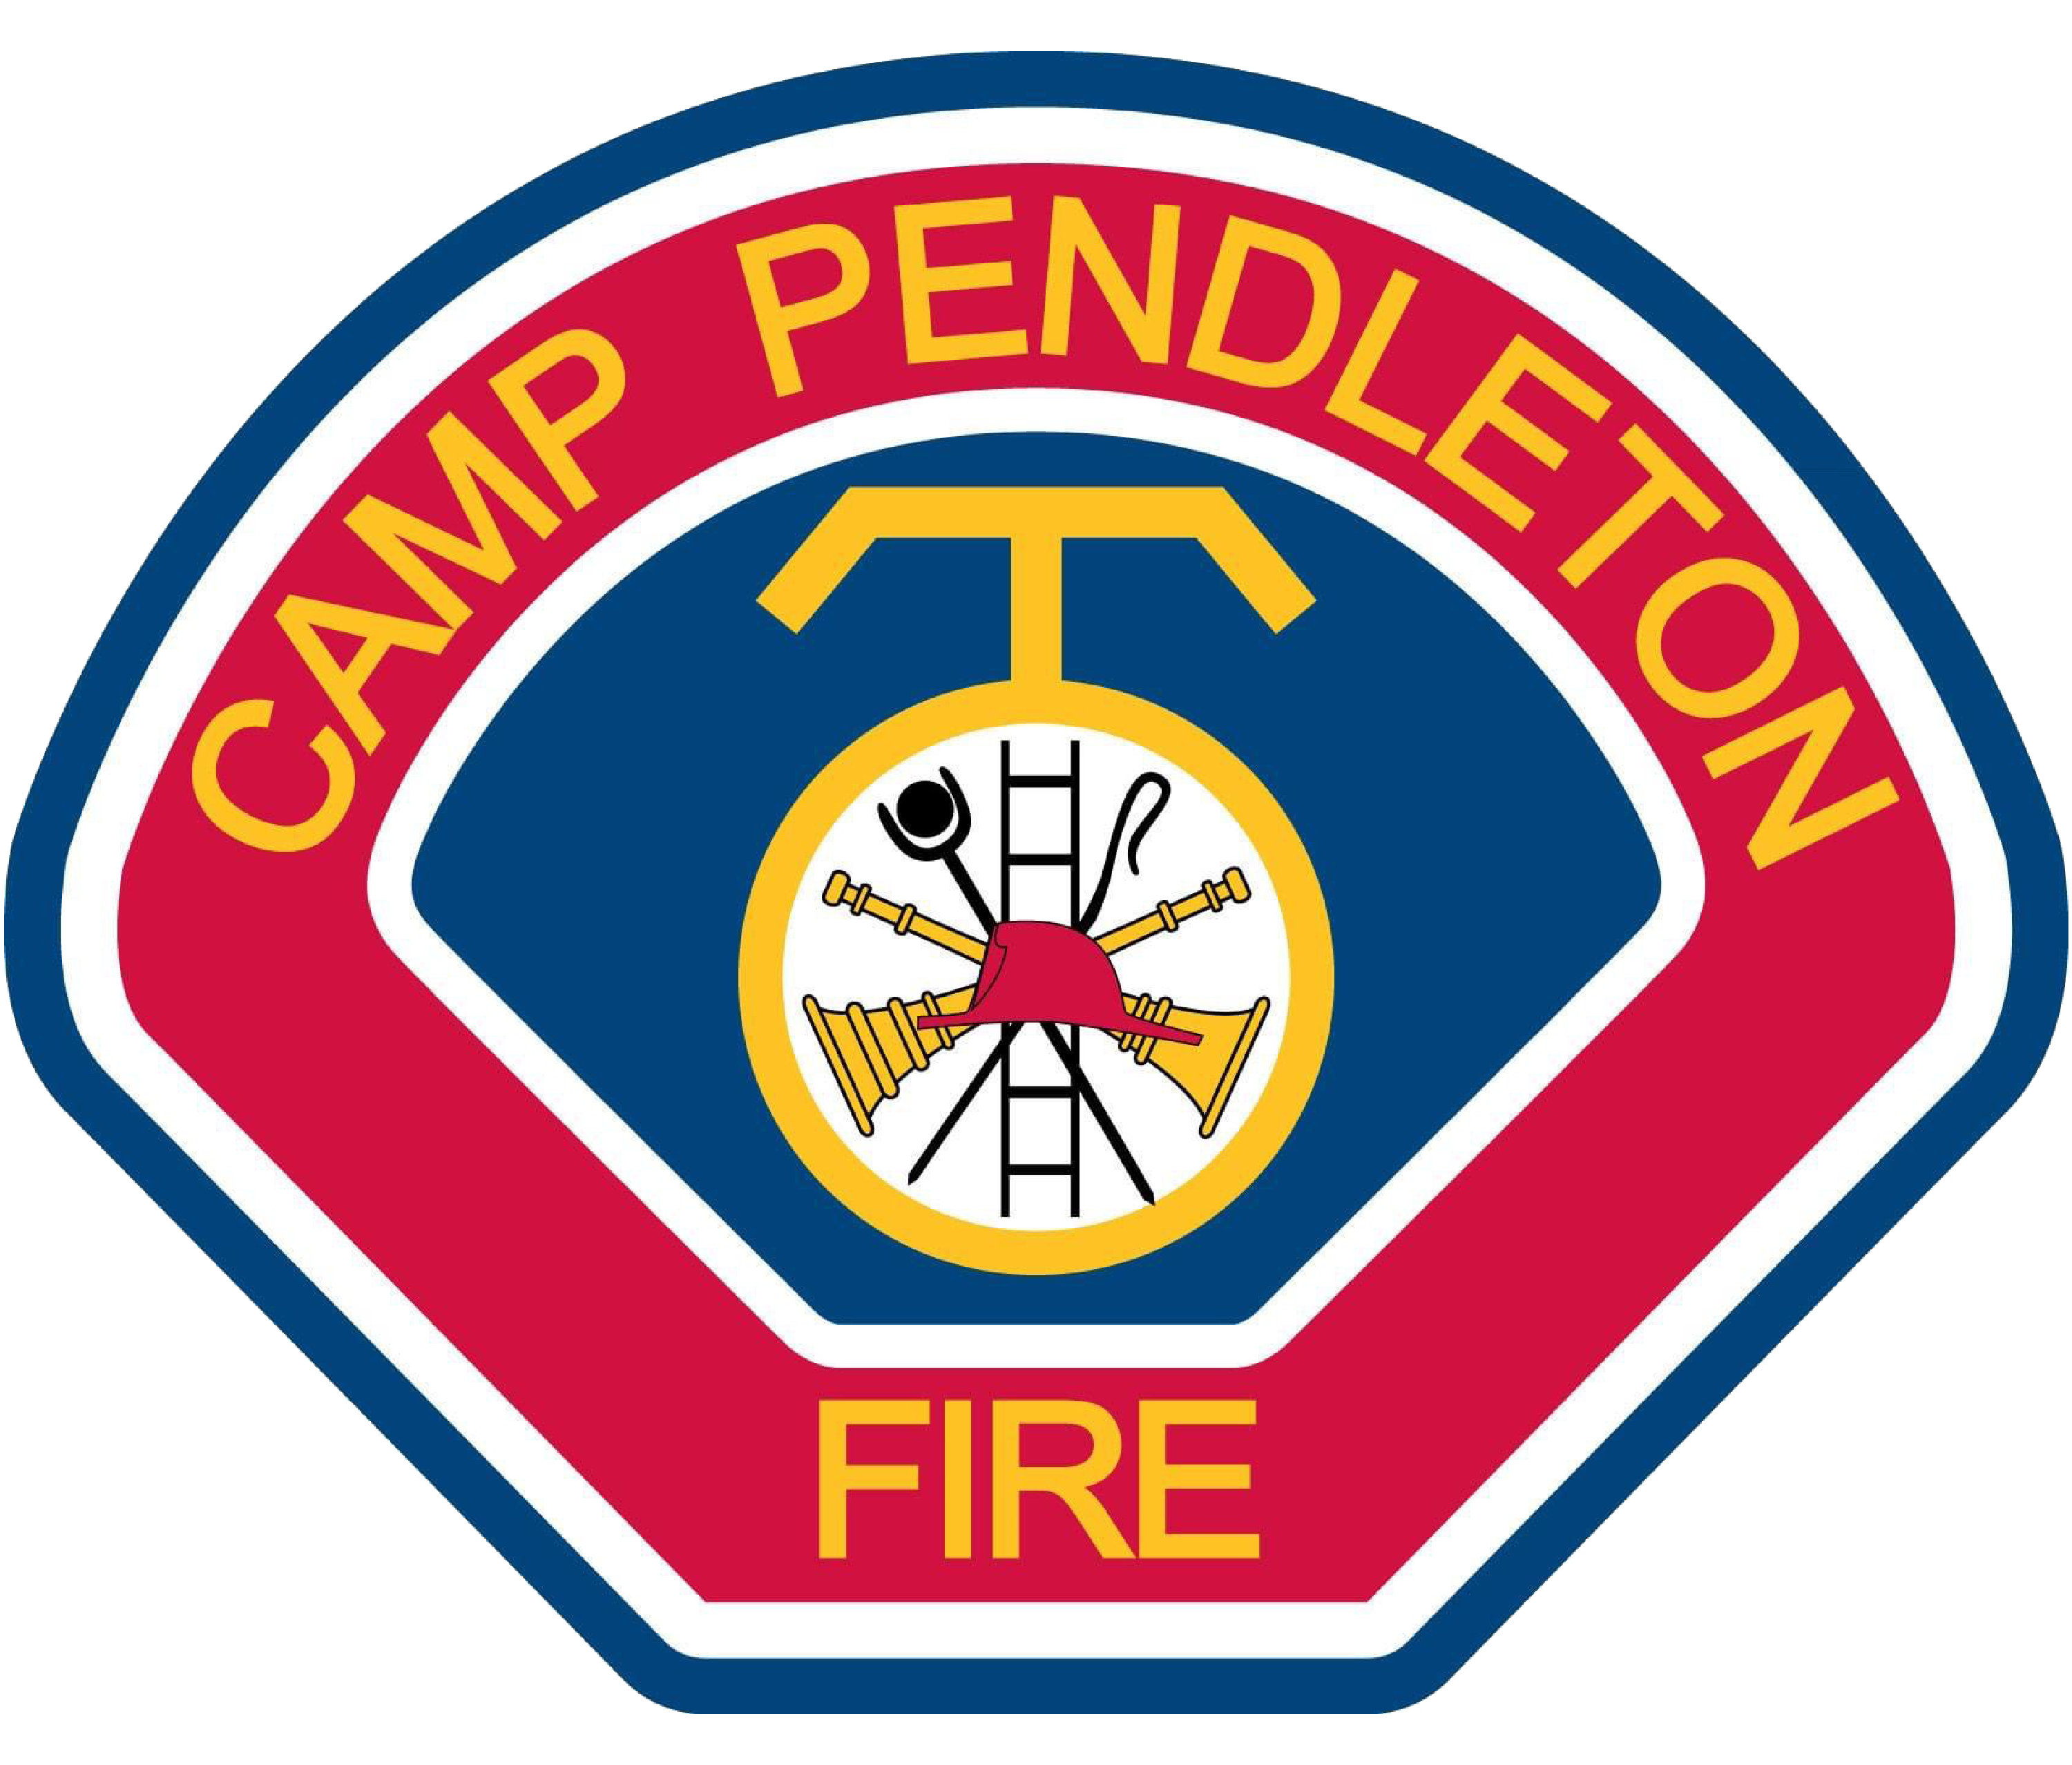 CAMP PENDLETON FIRE